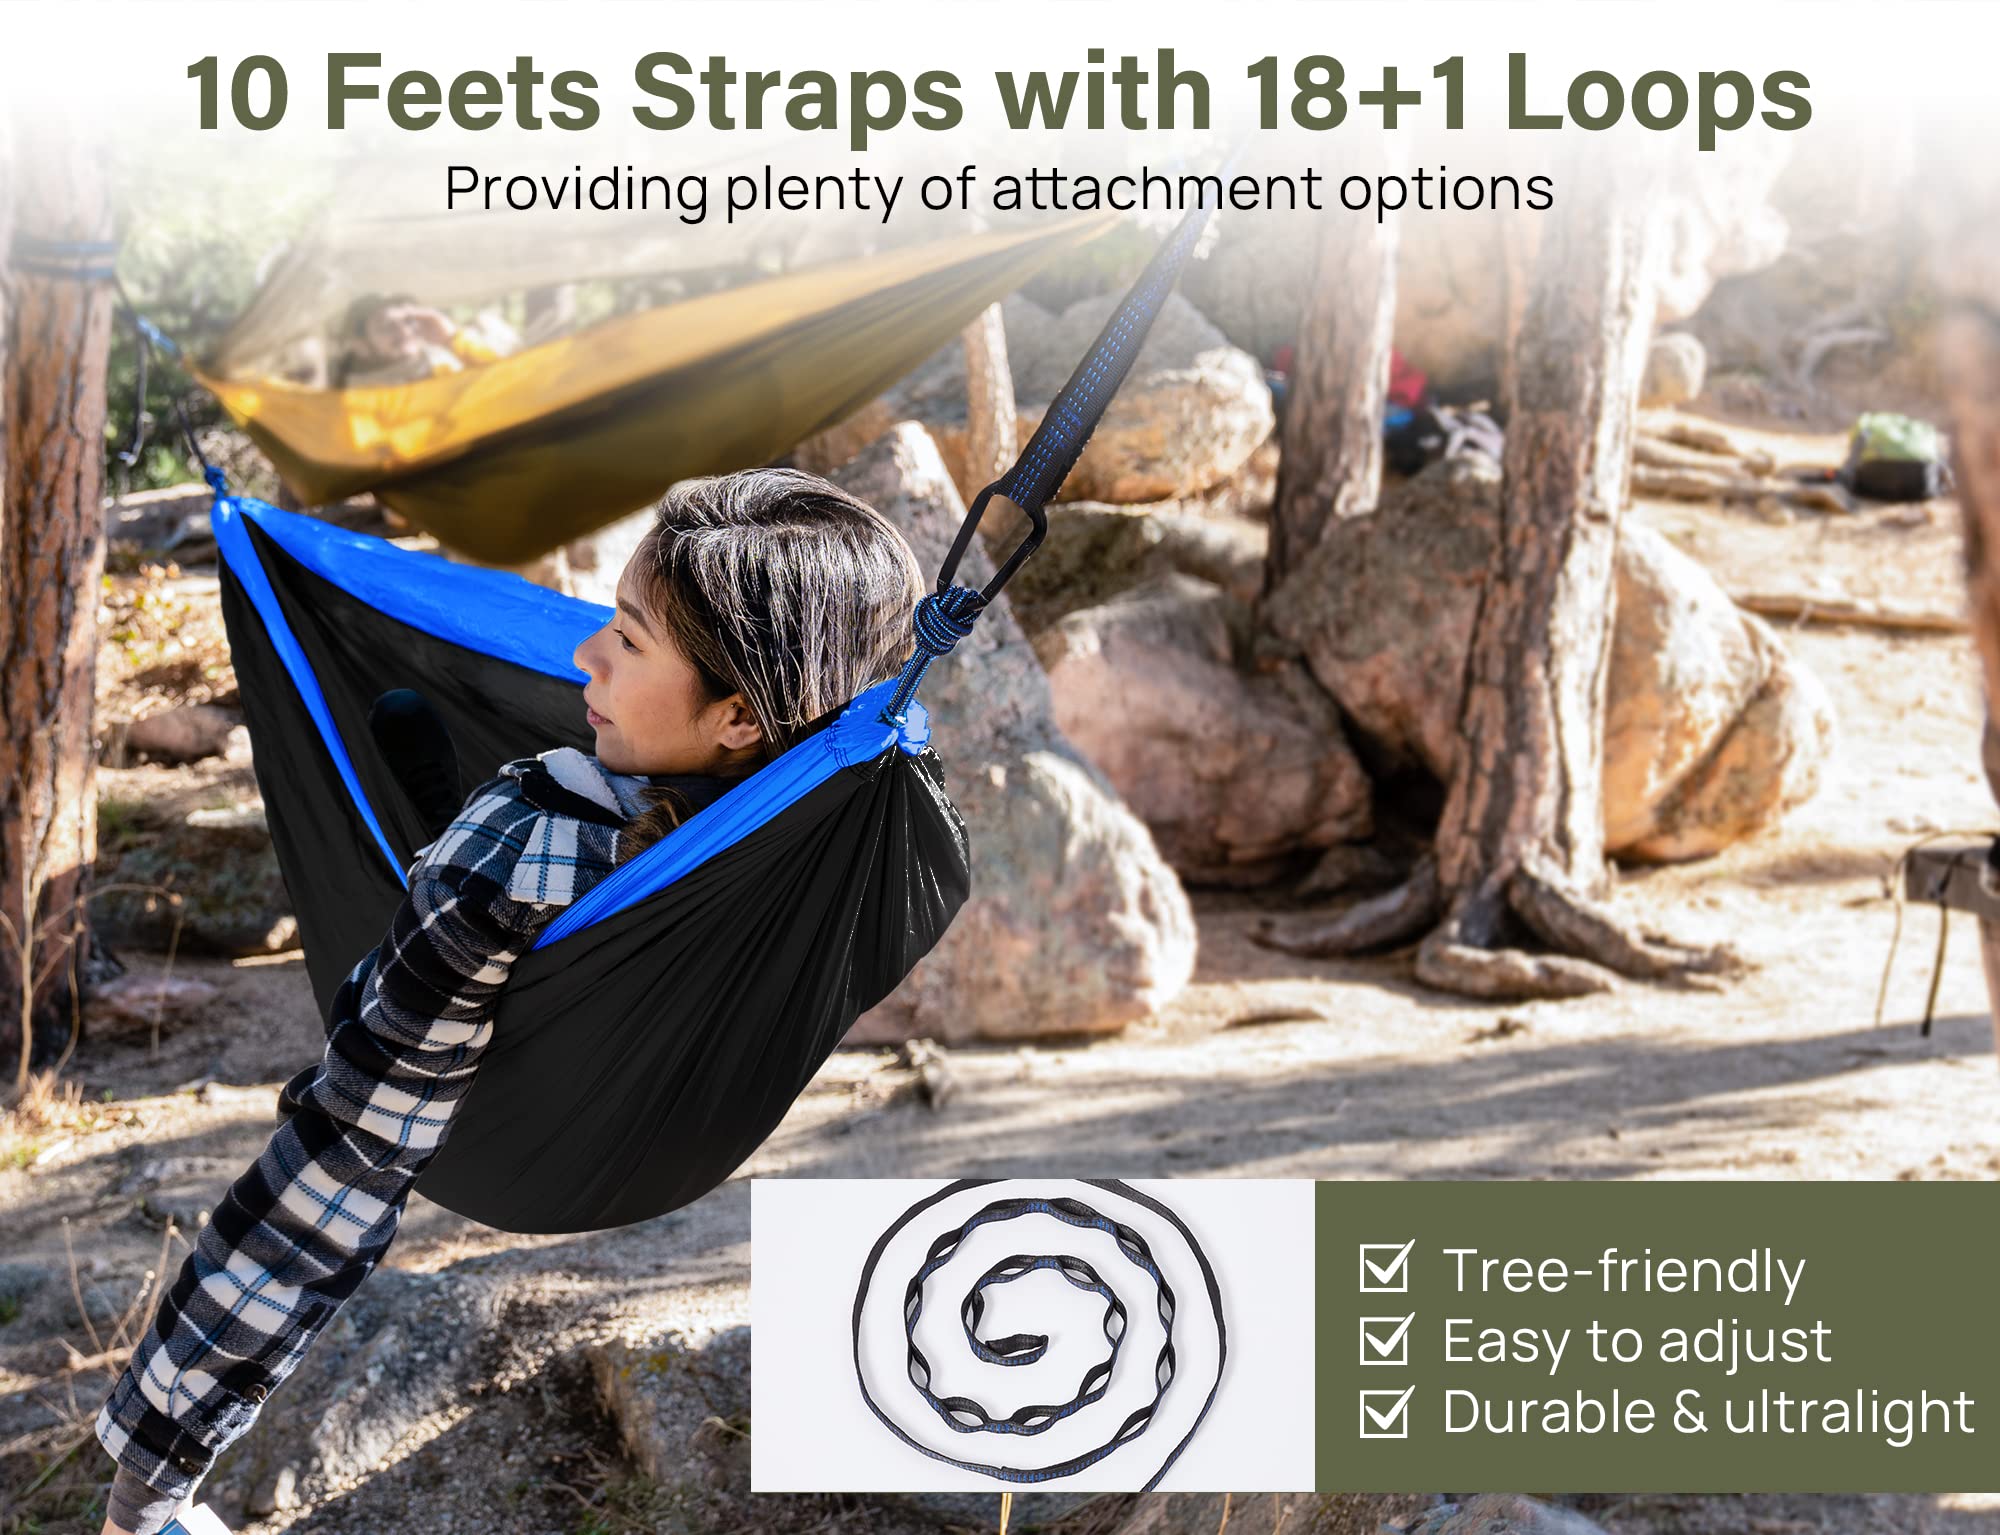 Kootek Camping Hammock Double Portable Hammocks with 2 Tree Straps, Lightweight Nylon Parachute Hammocks for Backpacking, Travel, Beach, Backyard, Patio, Hiking (Black & Blue, Large)